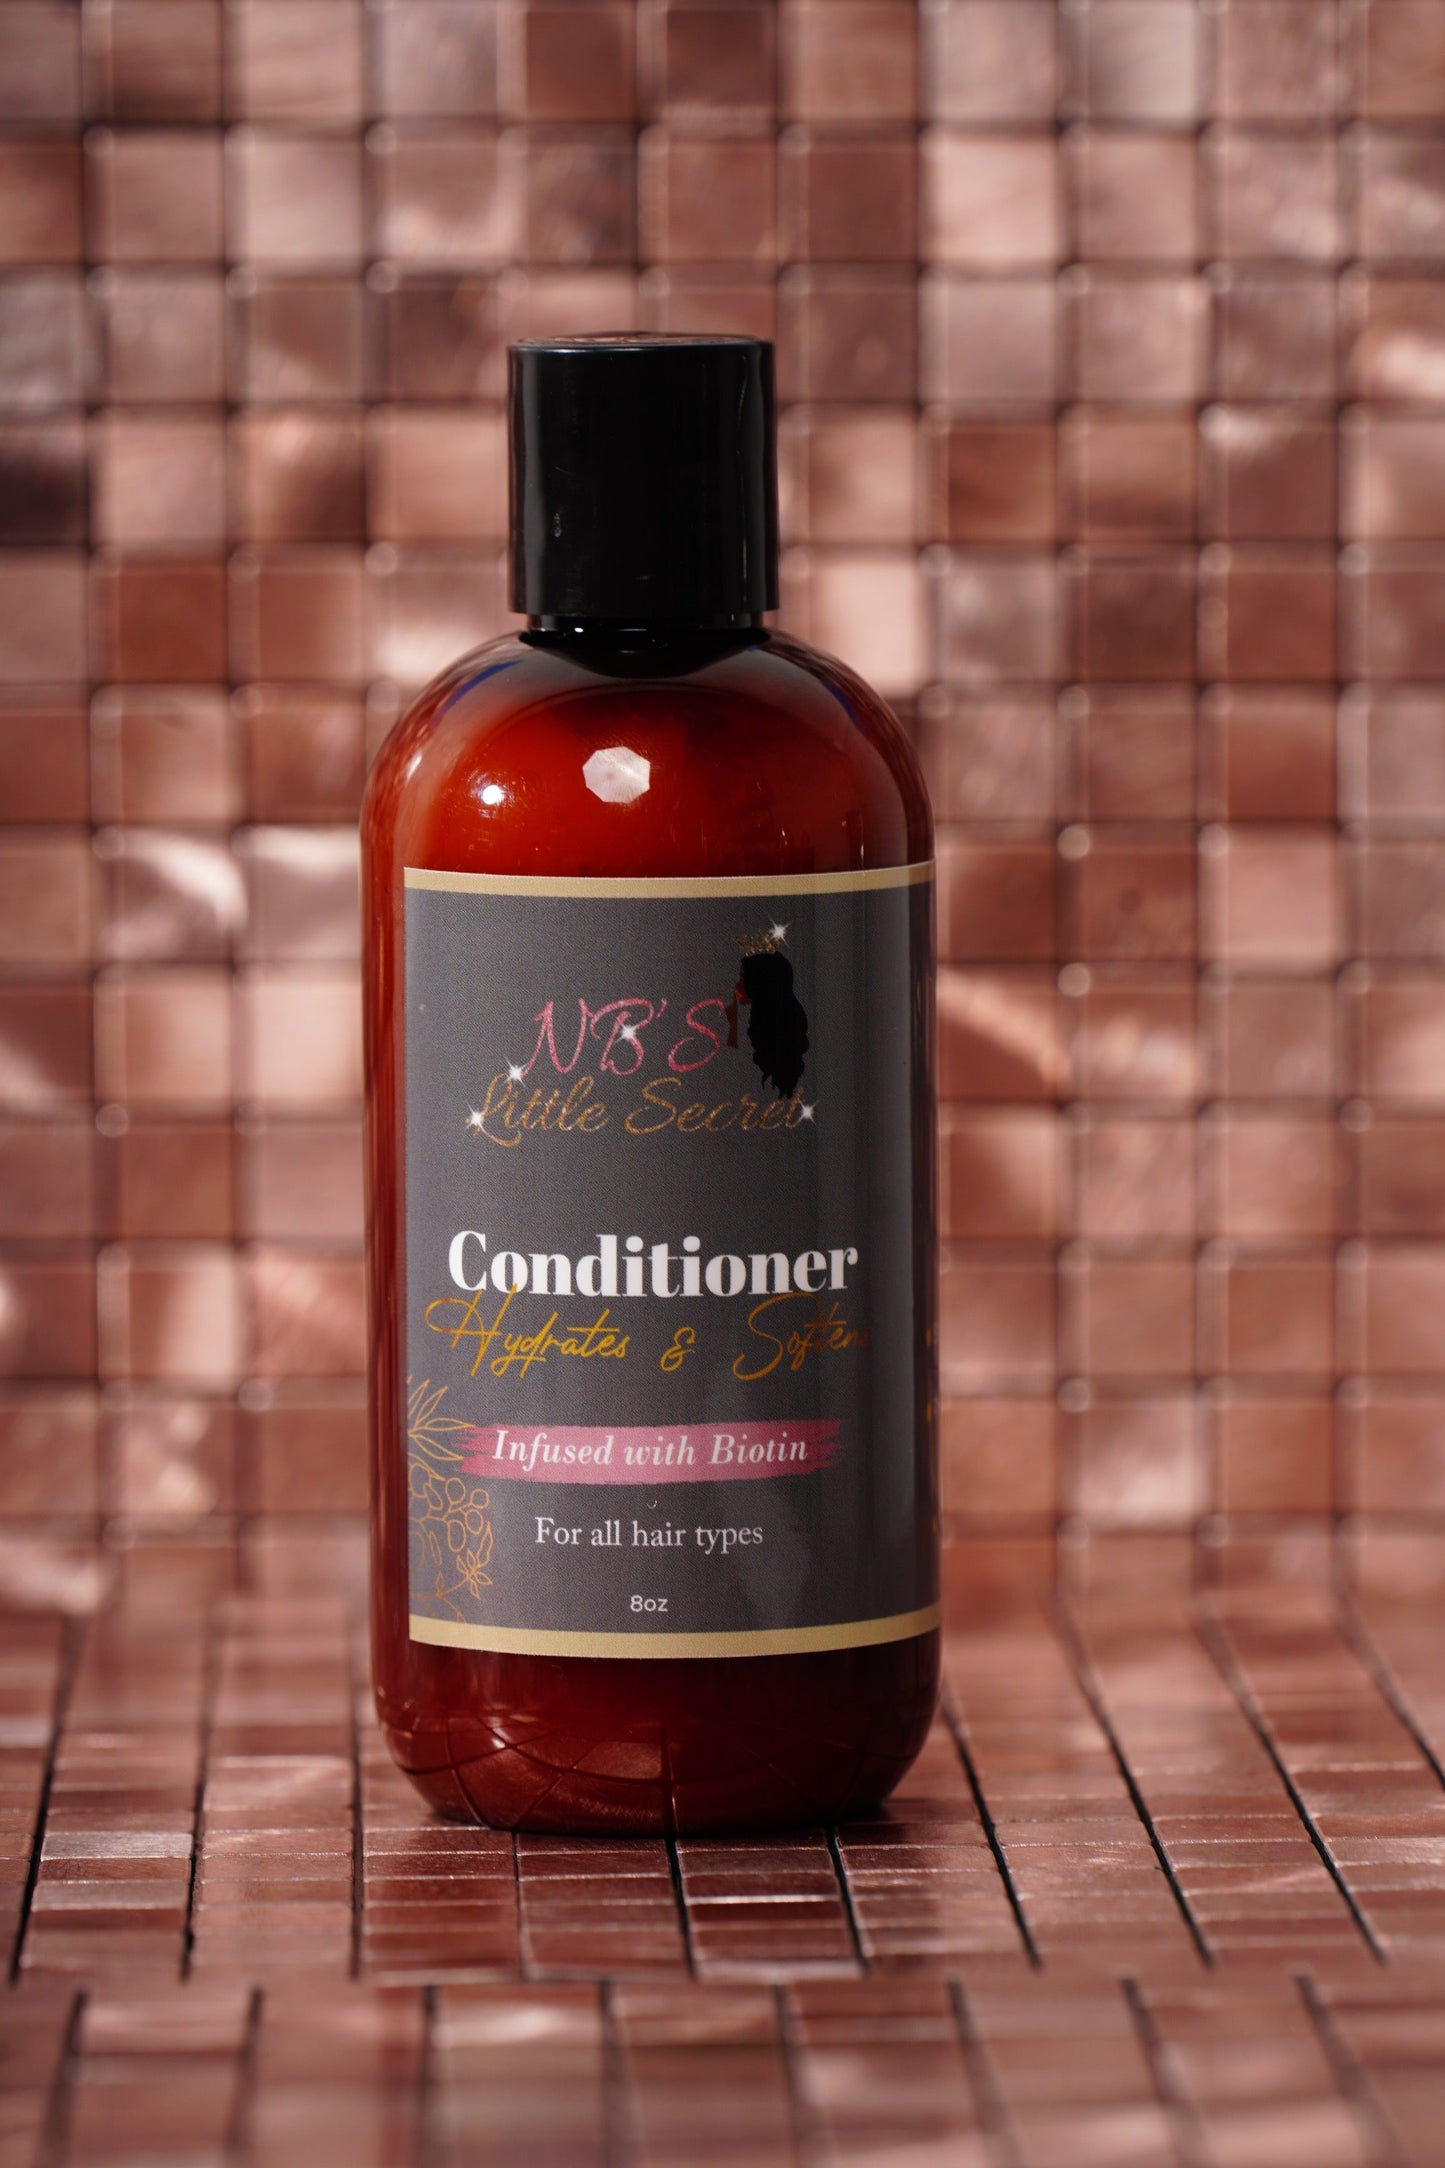 Nblittlesecret Shampoo and Conditioner Bundle